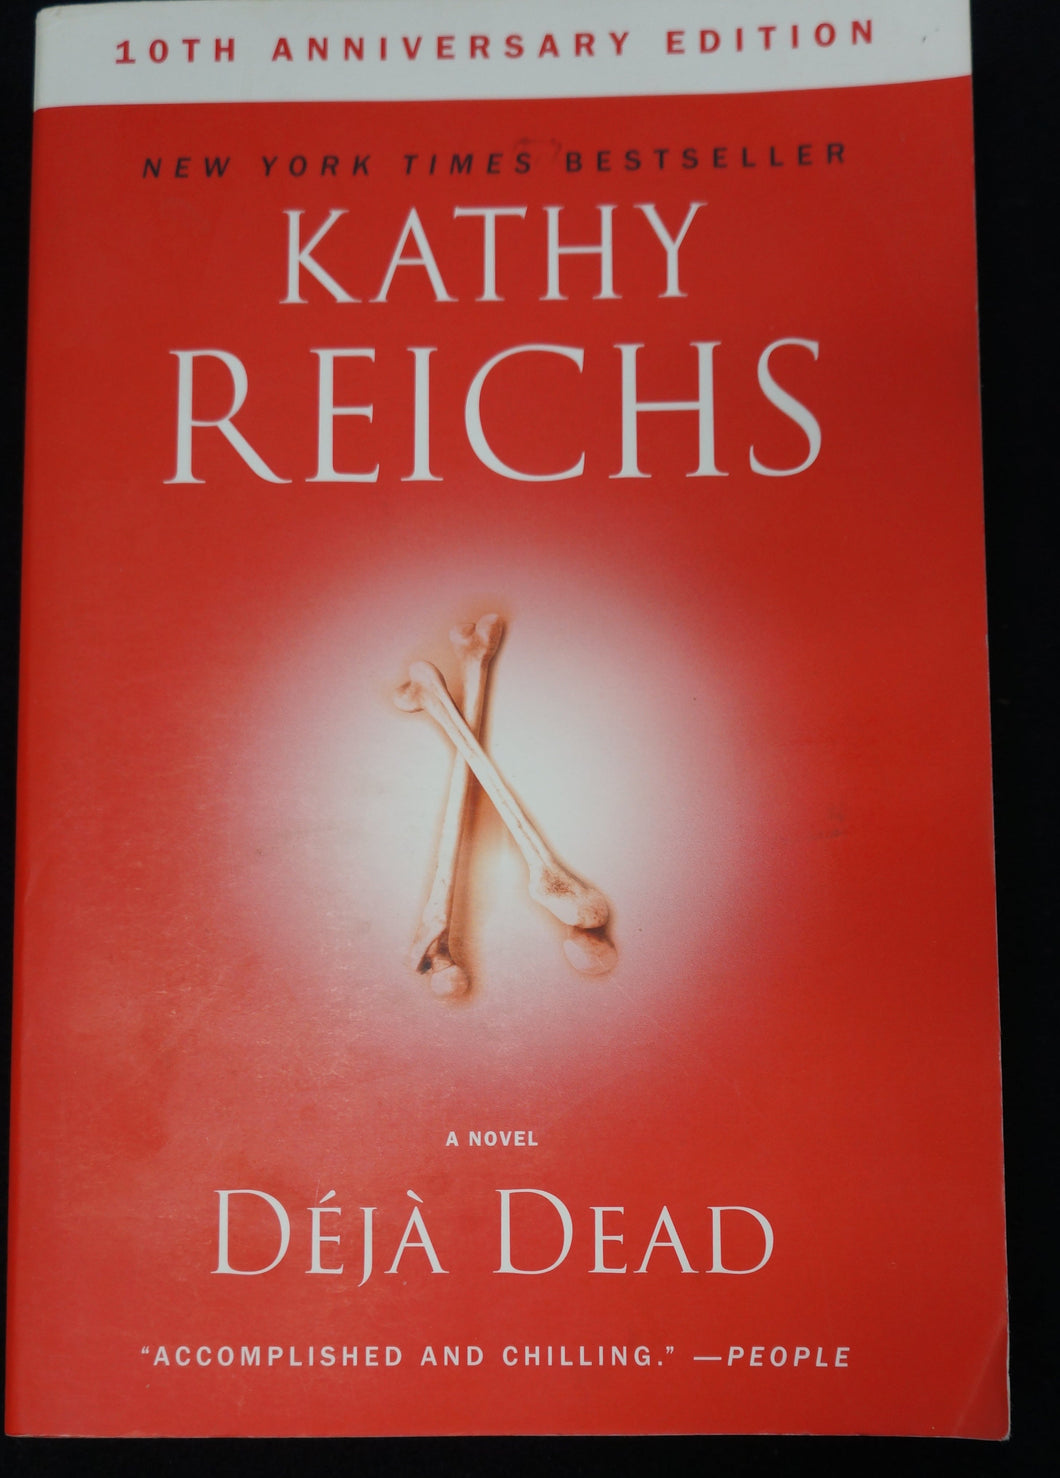 Deja Dead: A Novel by Kathy Reichs